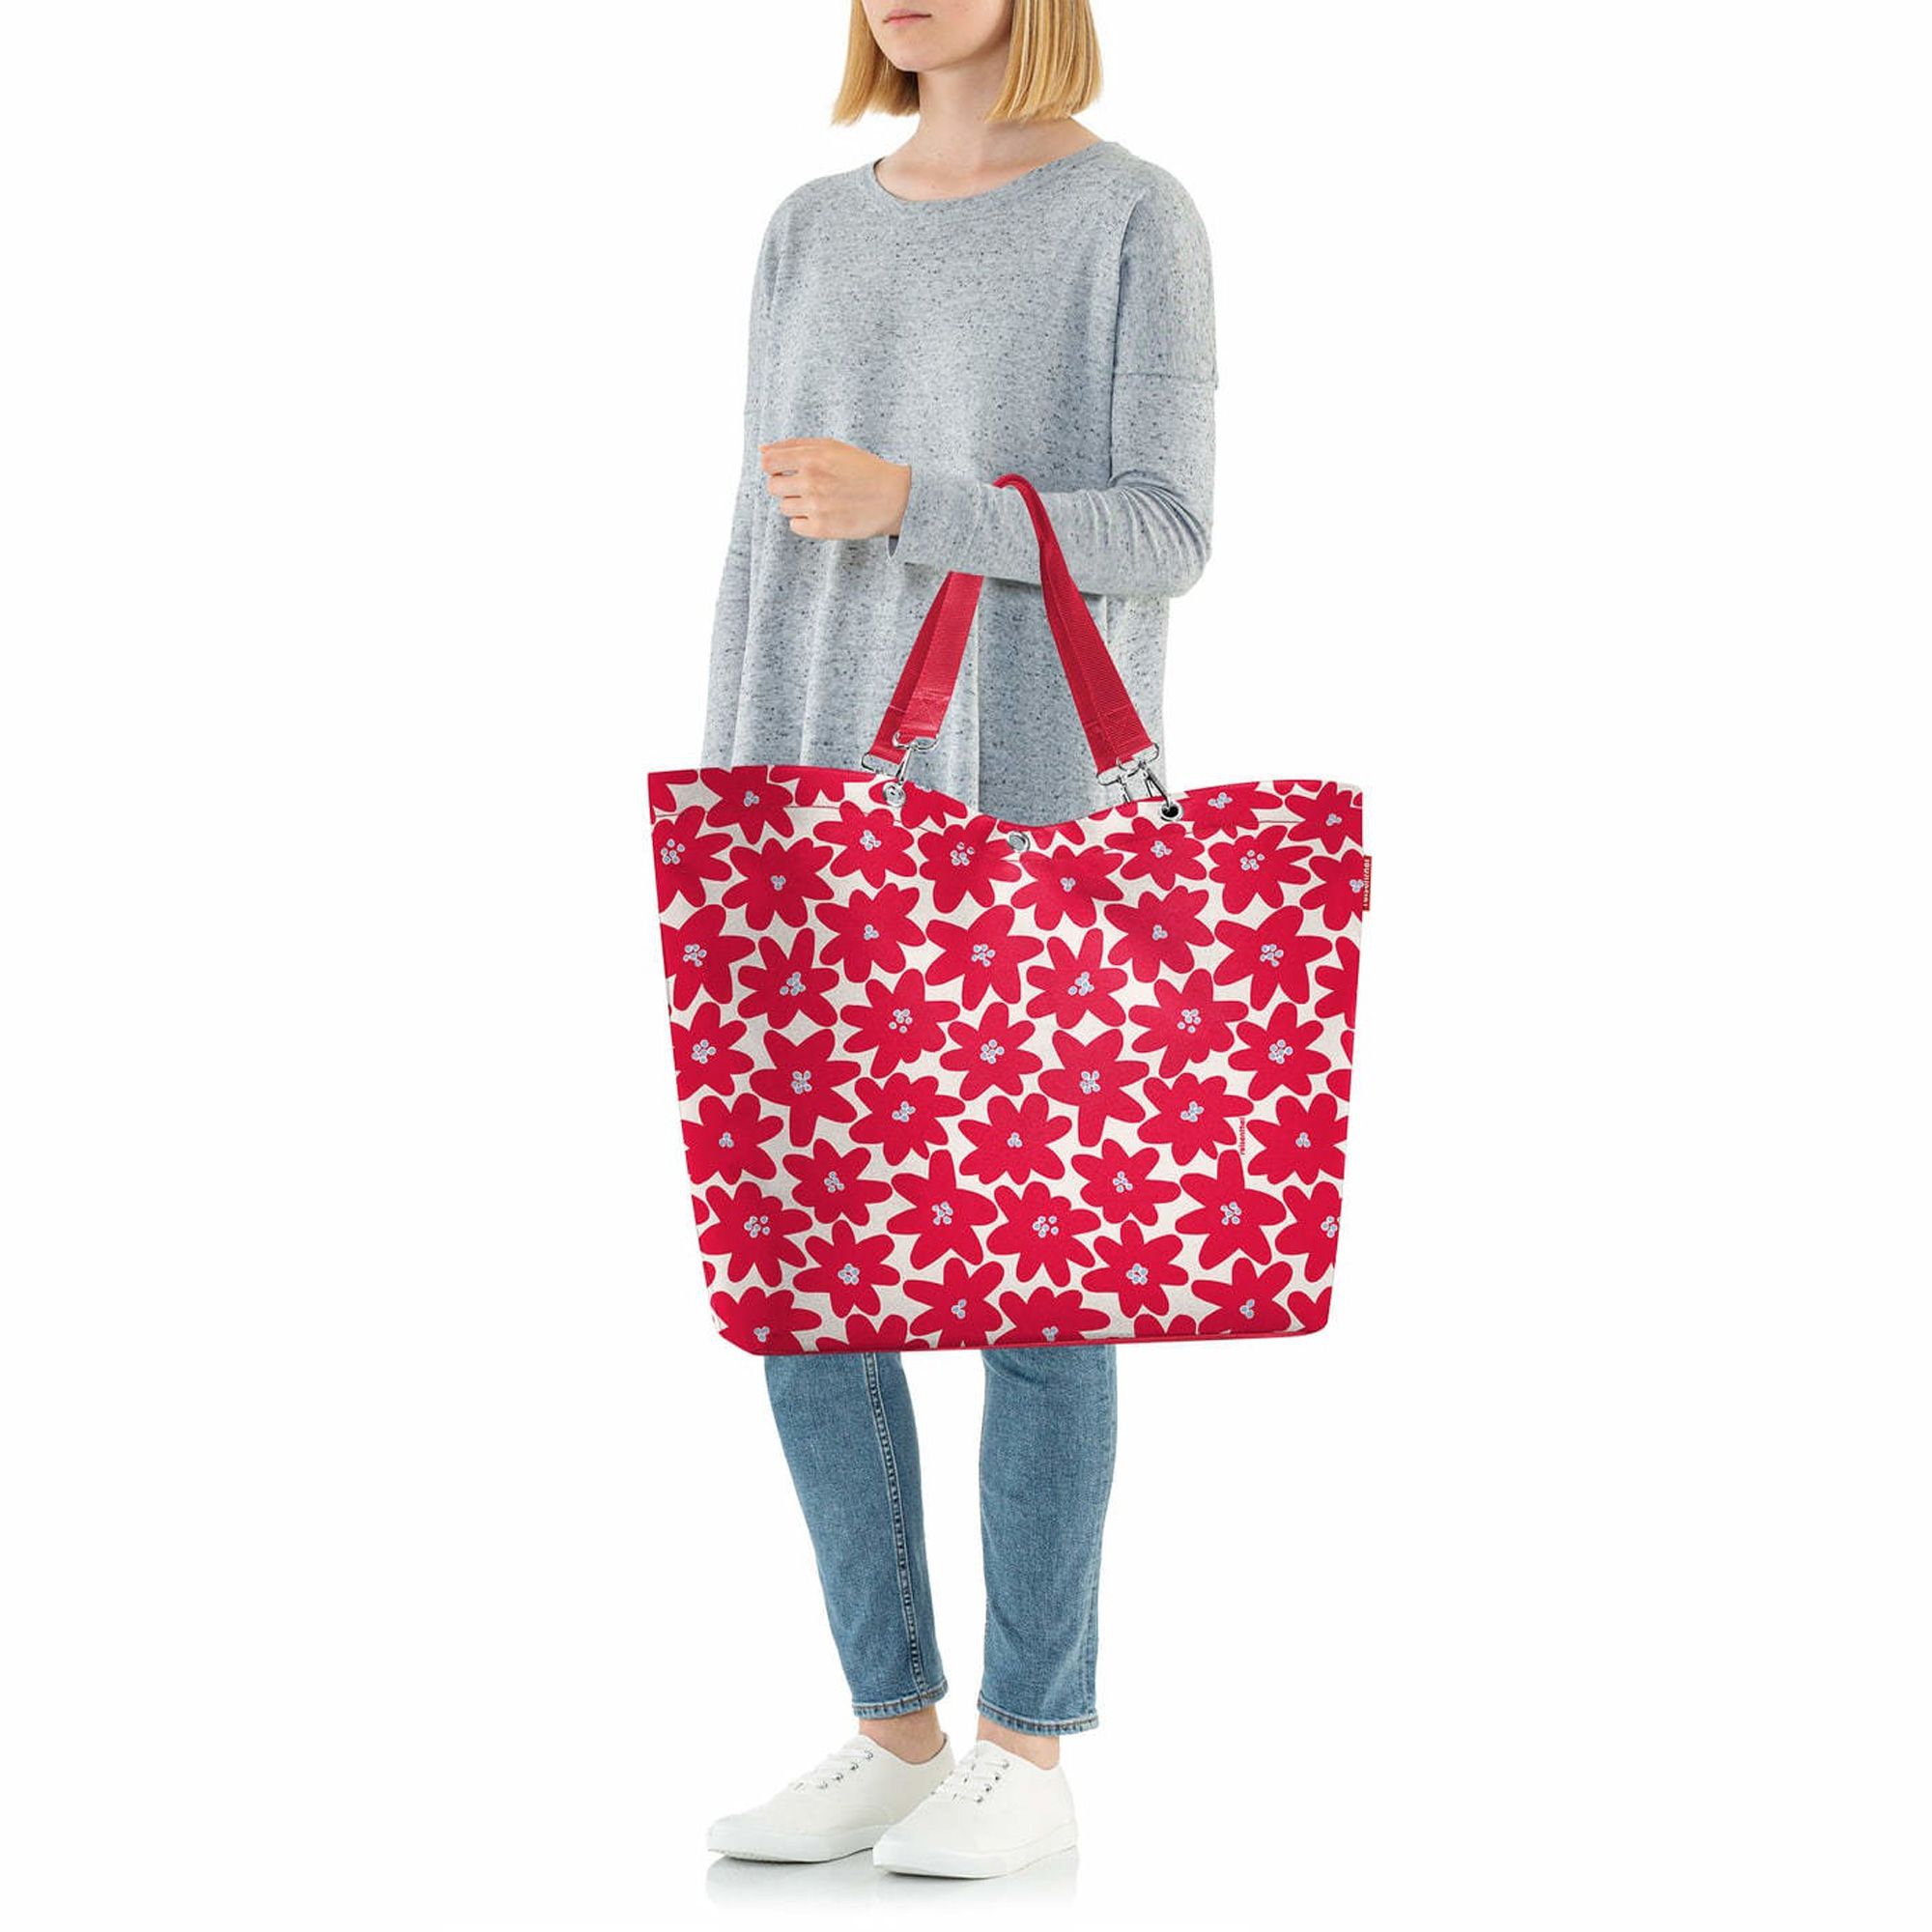 reisenthel - shopper XL - daisy red